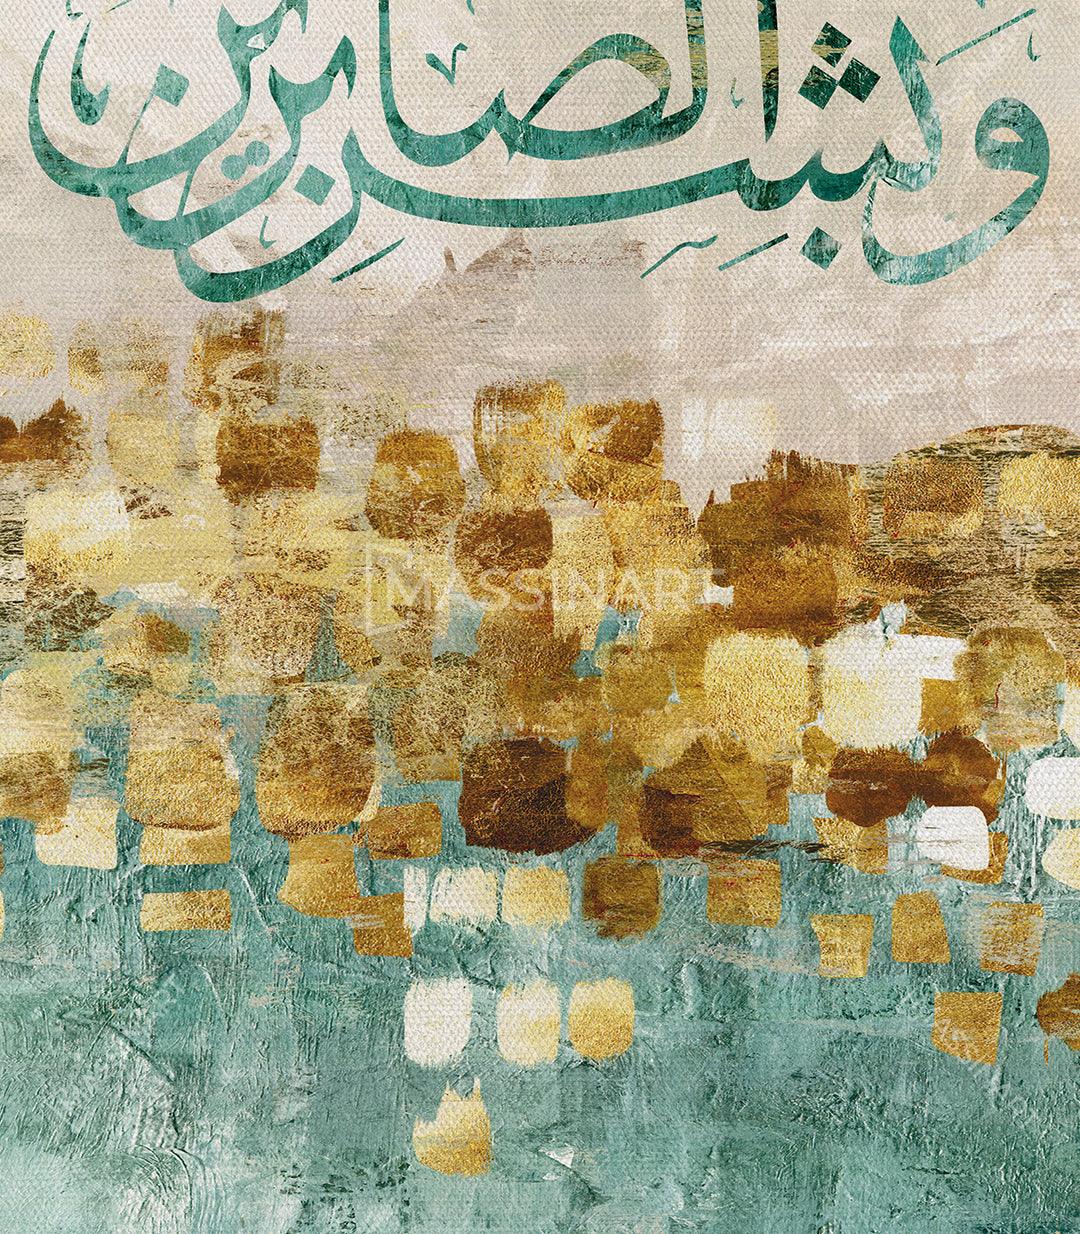 Triptyque Arabic Calligraphy Art - Tableau islamique